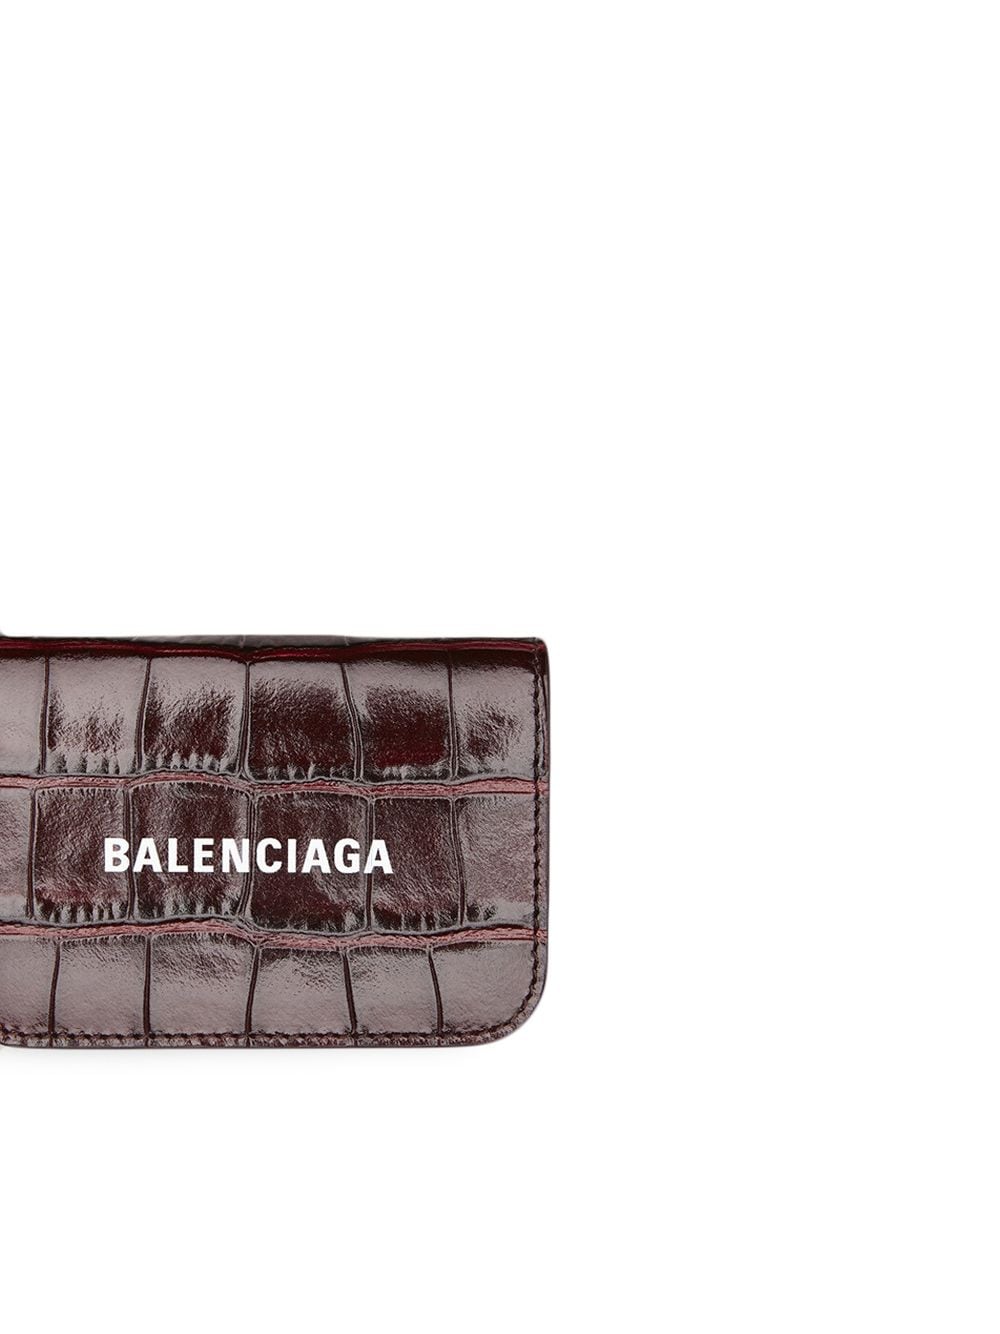 фото Balenciaga мини-кошелек cash